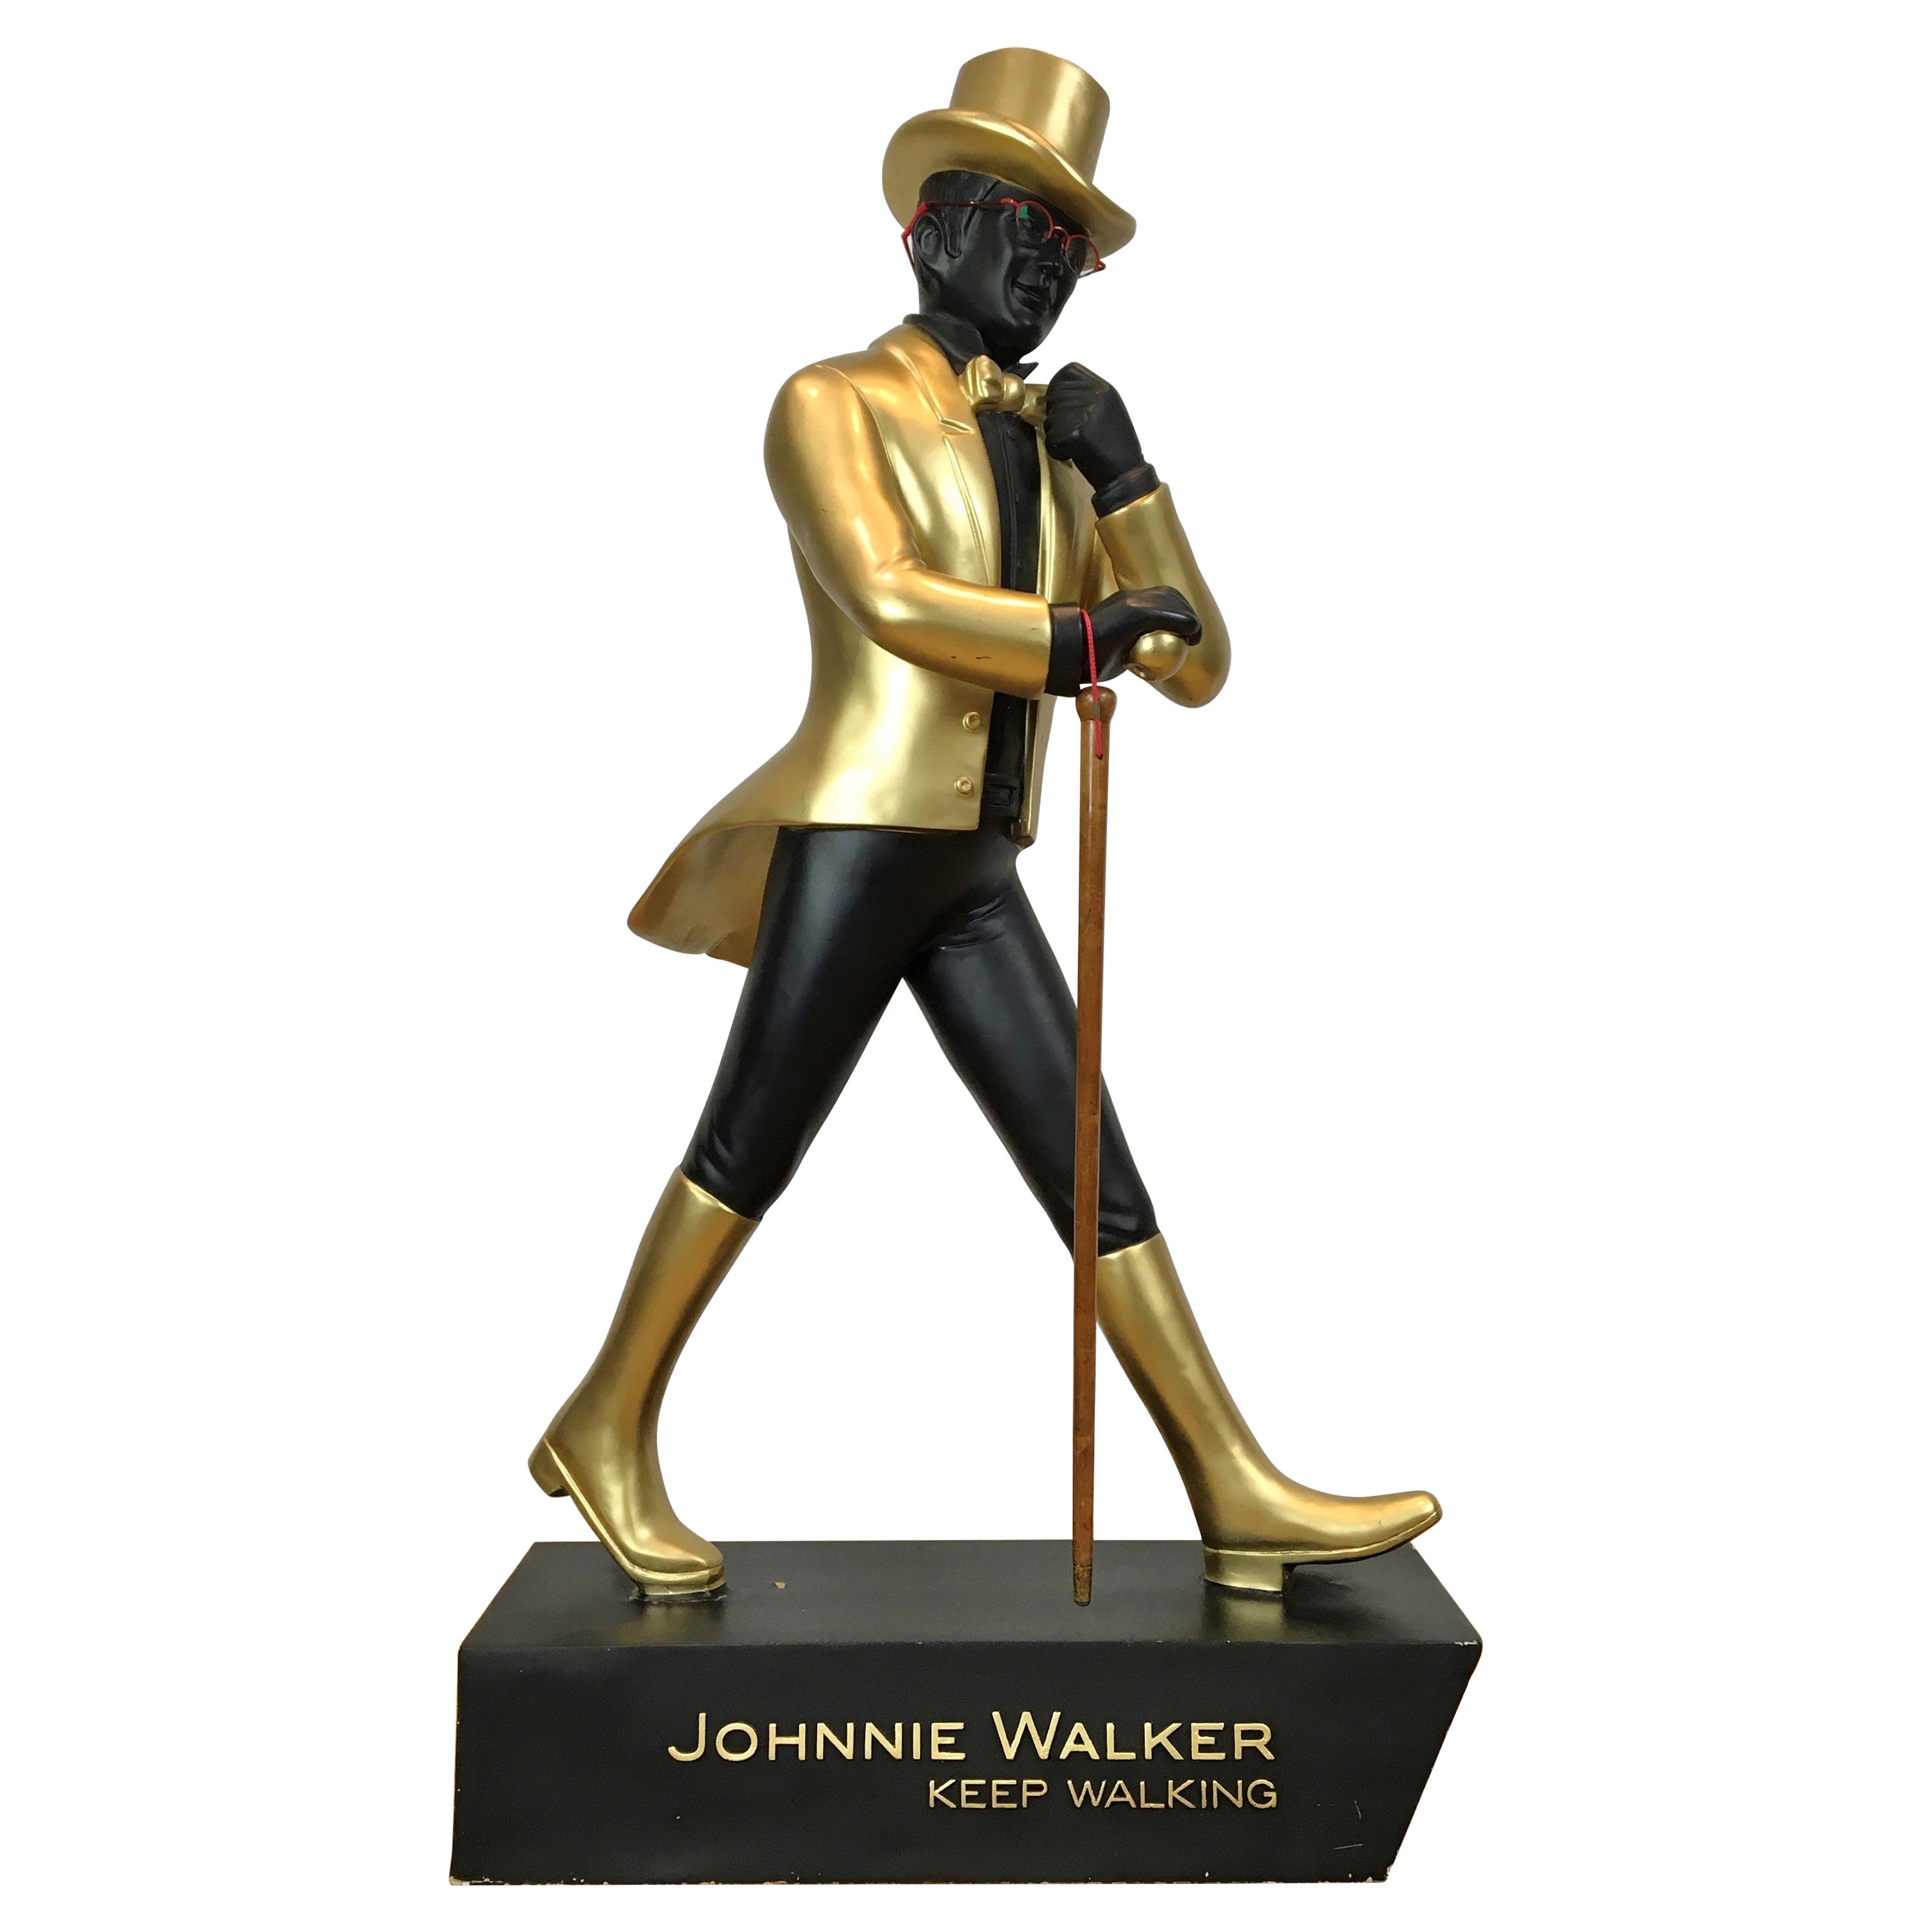 Lifesize Johnnie Walker Shop Advertising Display Man For Sale